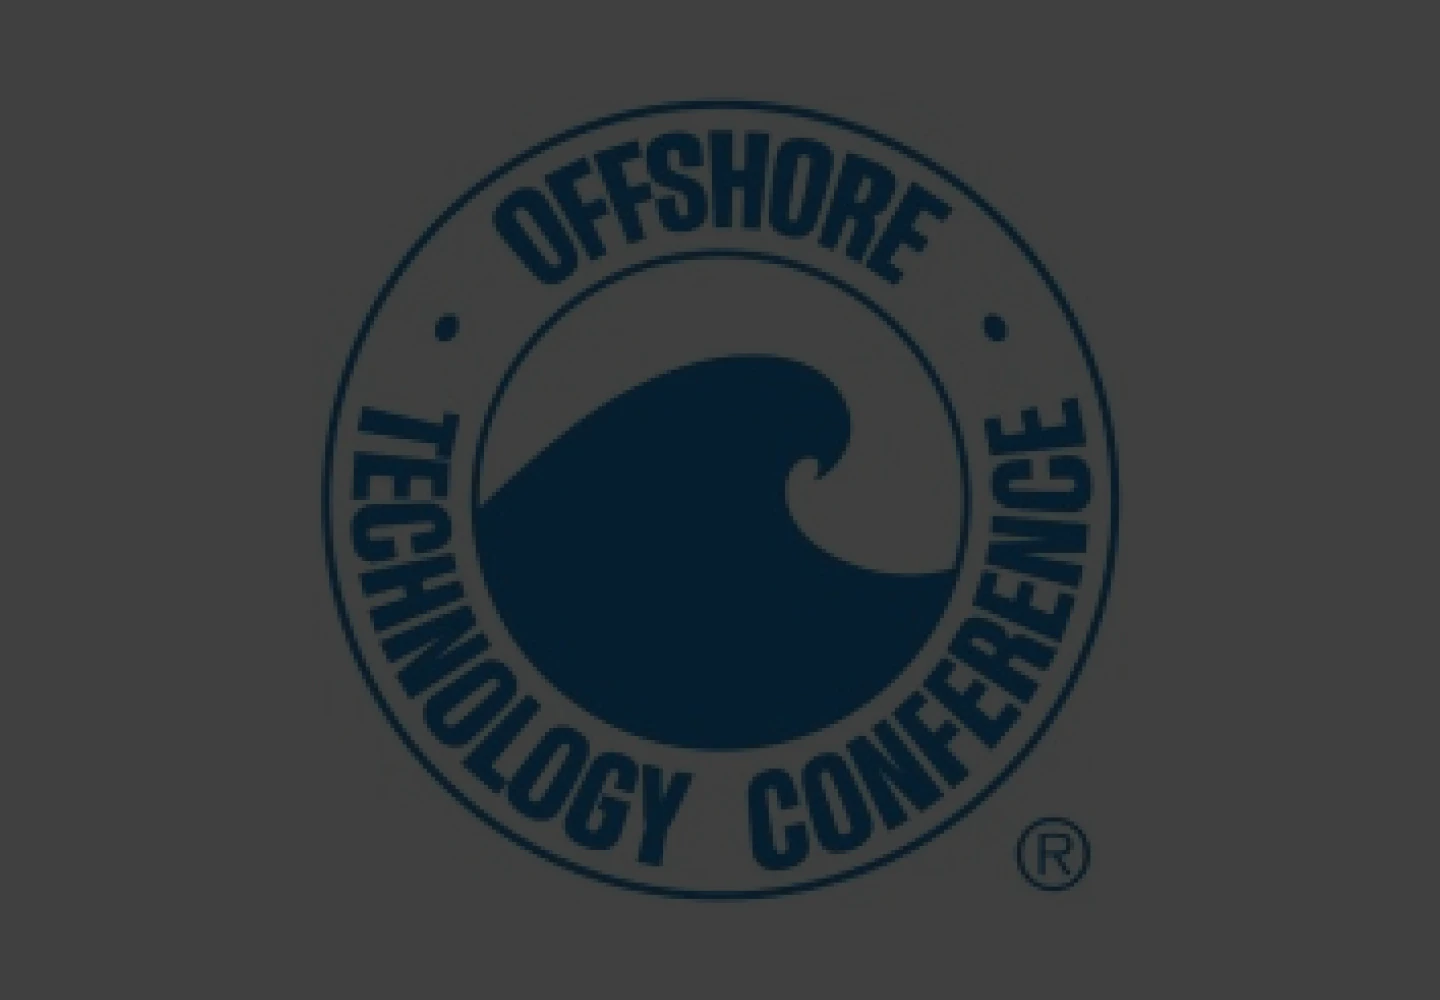 Logotipo da Offshore Technology Conference (OTC).